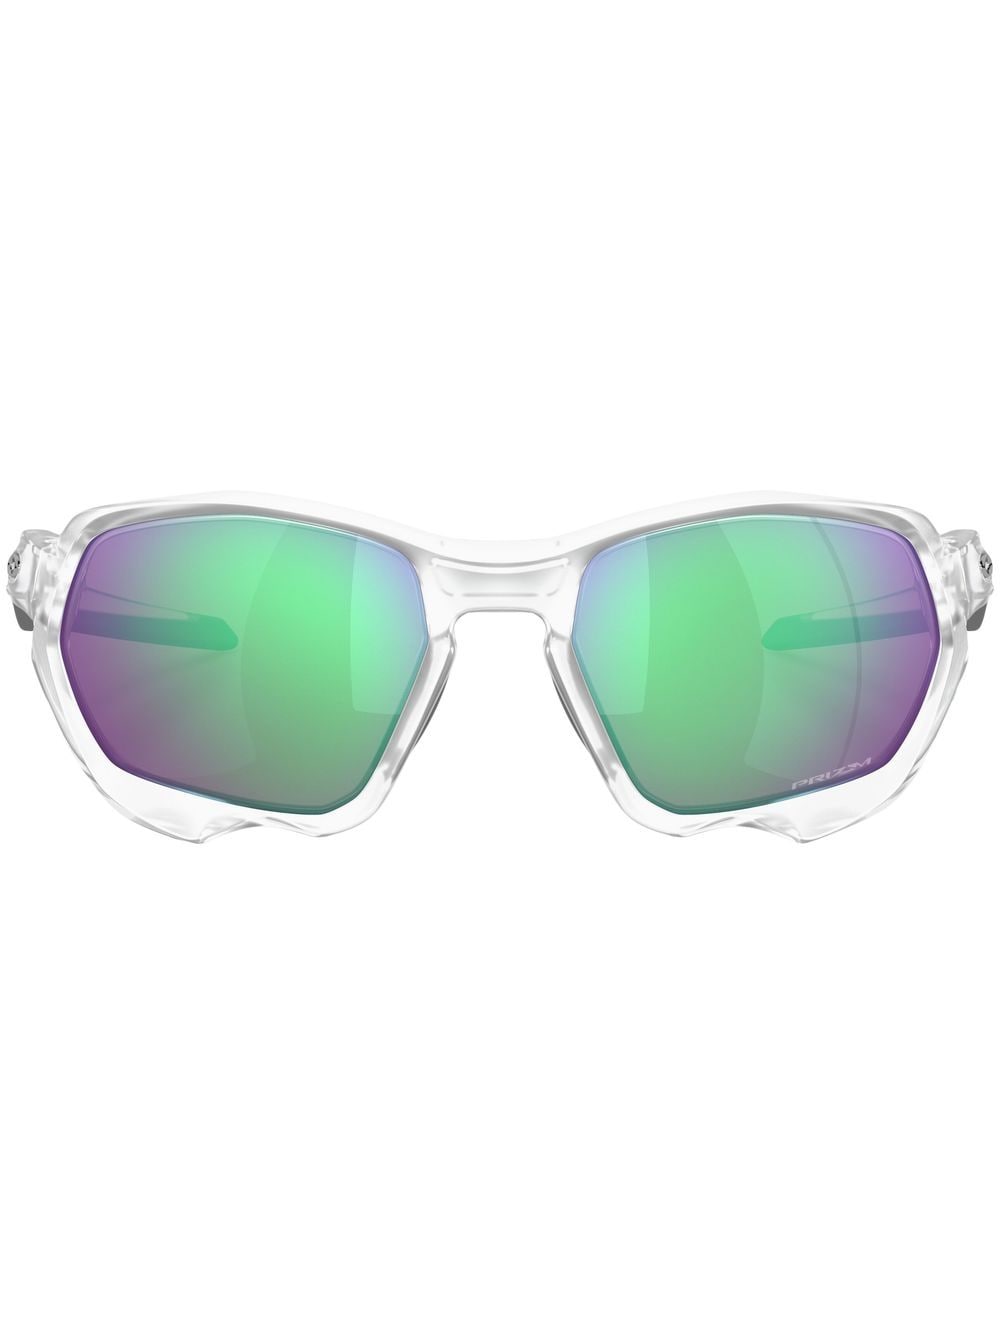 Image 1 of Oakley Plazma mirrored sunglasses